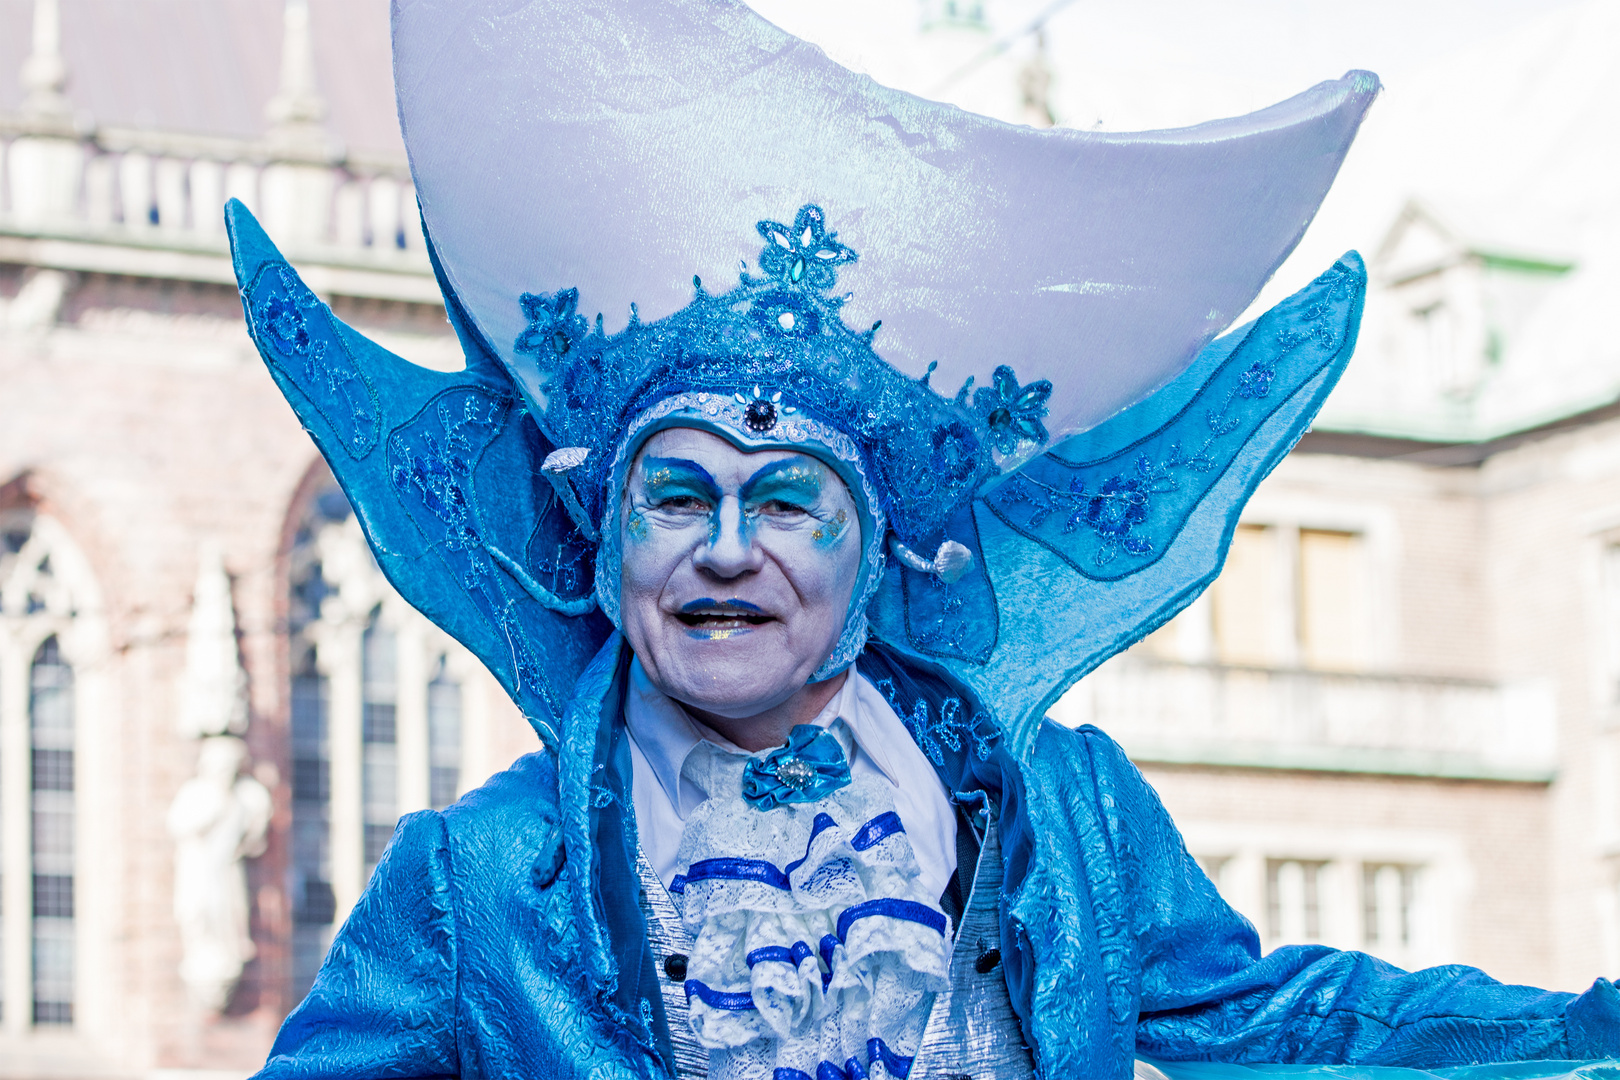 Strahlende Gesichter, Samba Karneval Bremen 2019, Bild VI